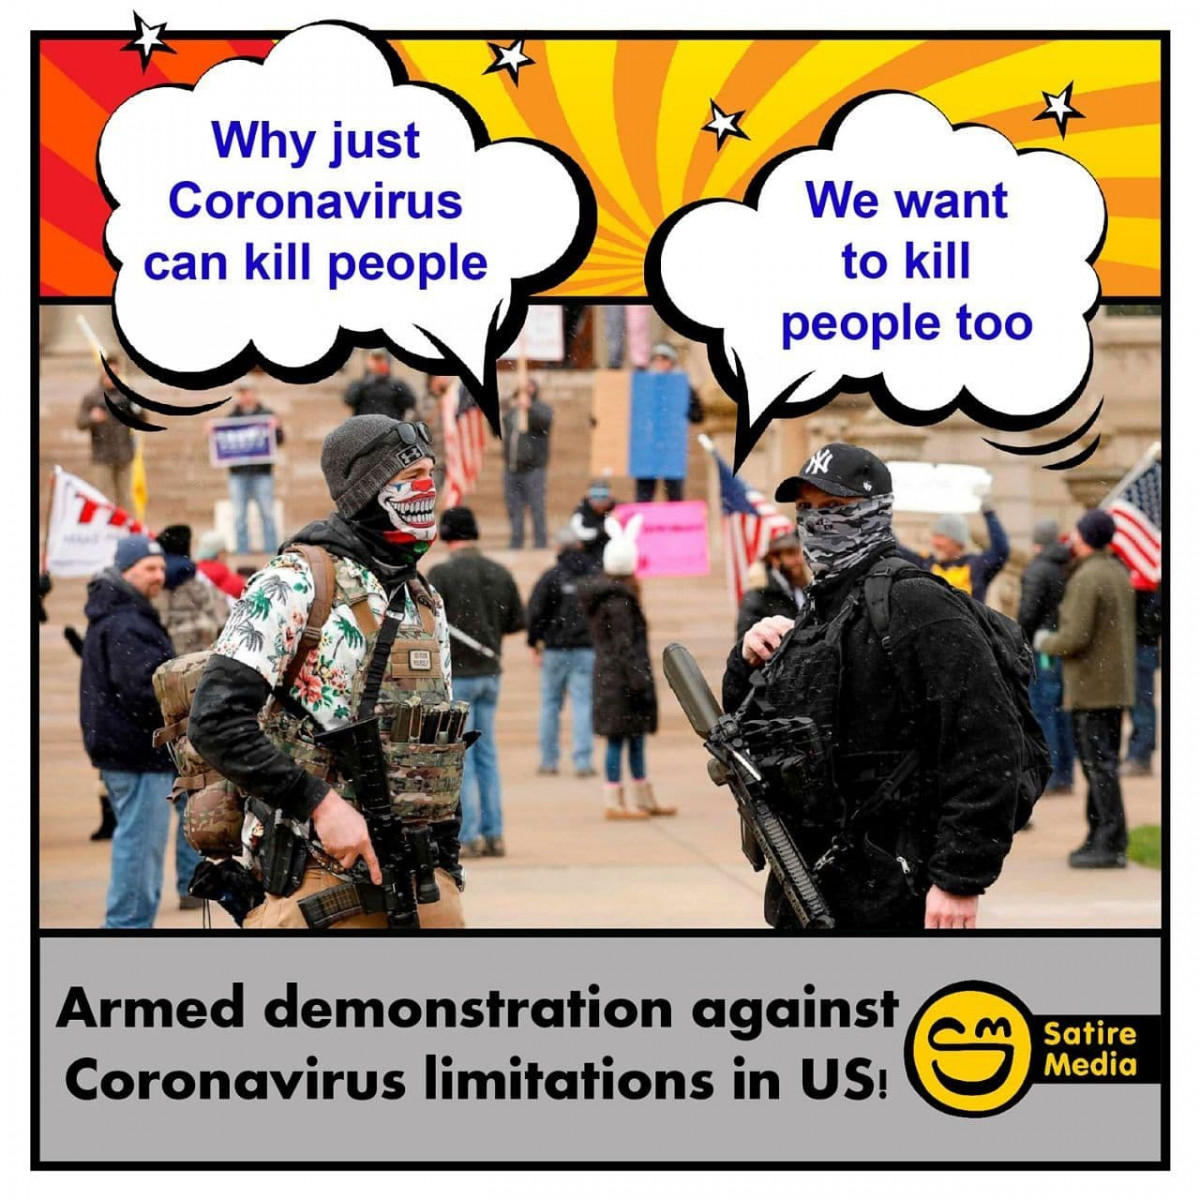 Armed demonstration against Coronavirus limitations in US